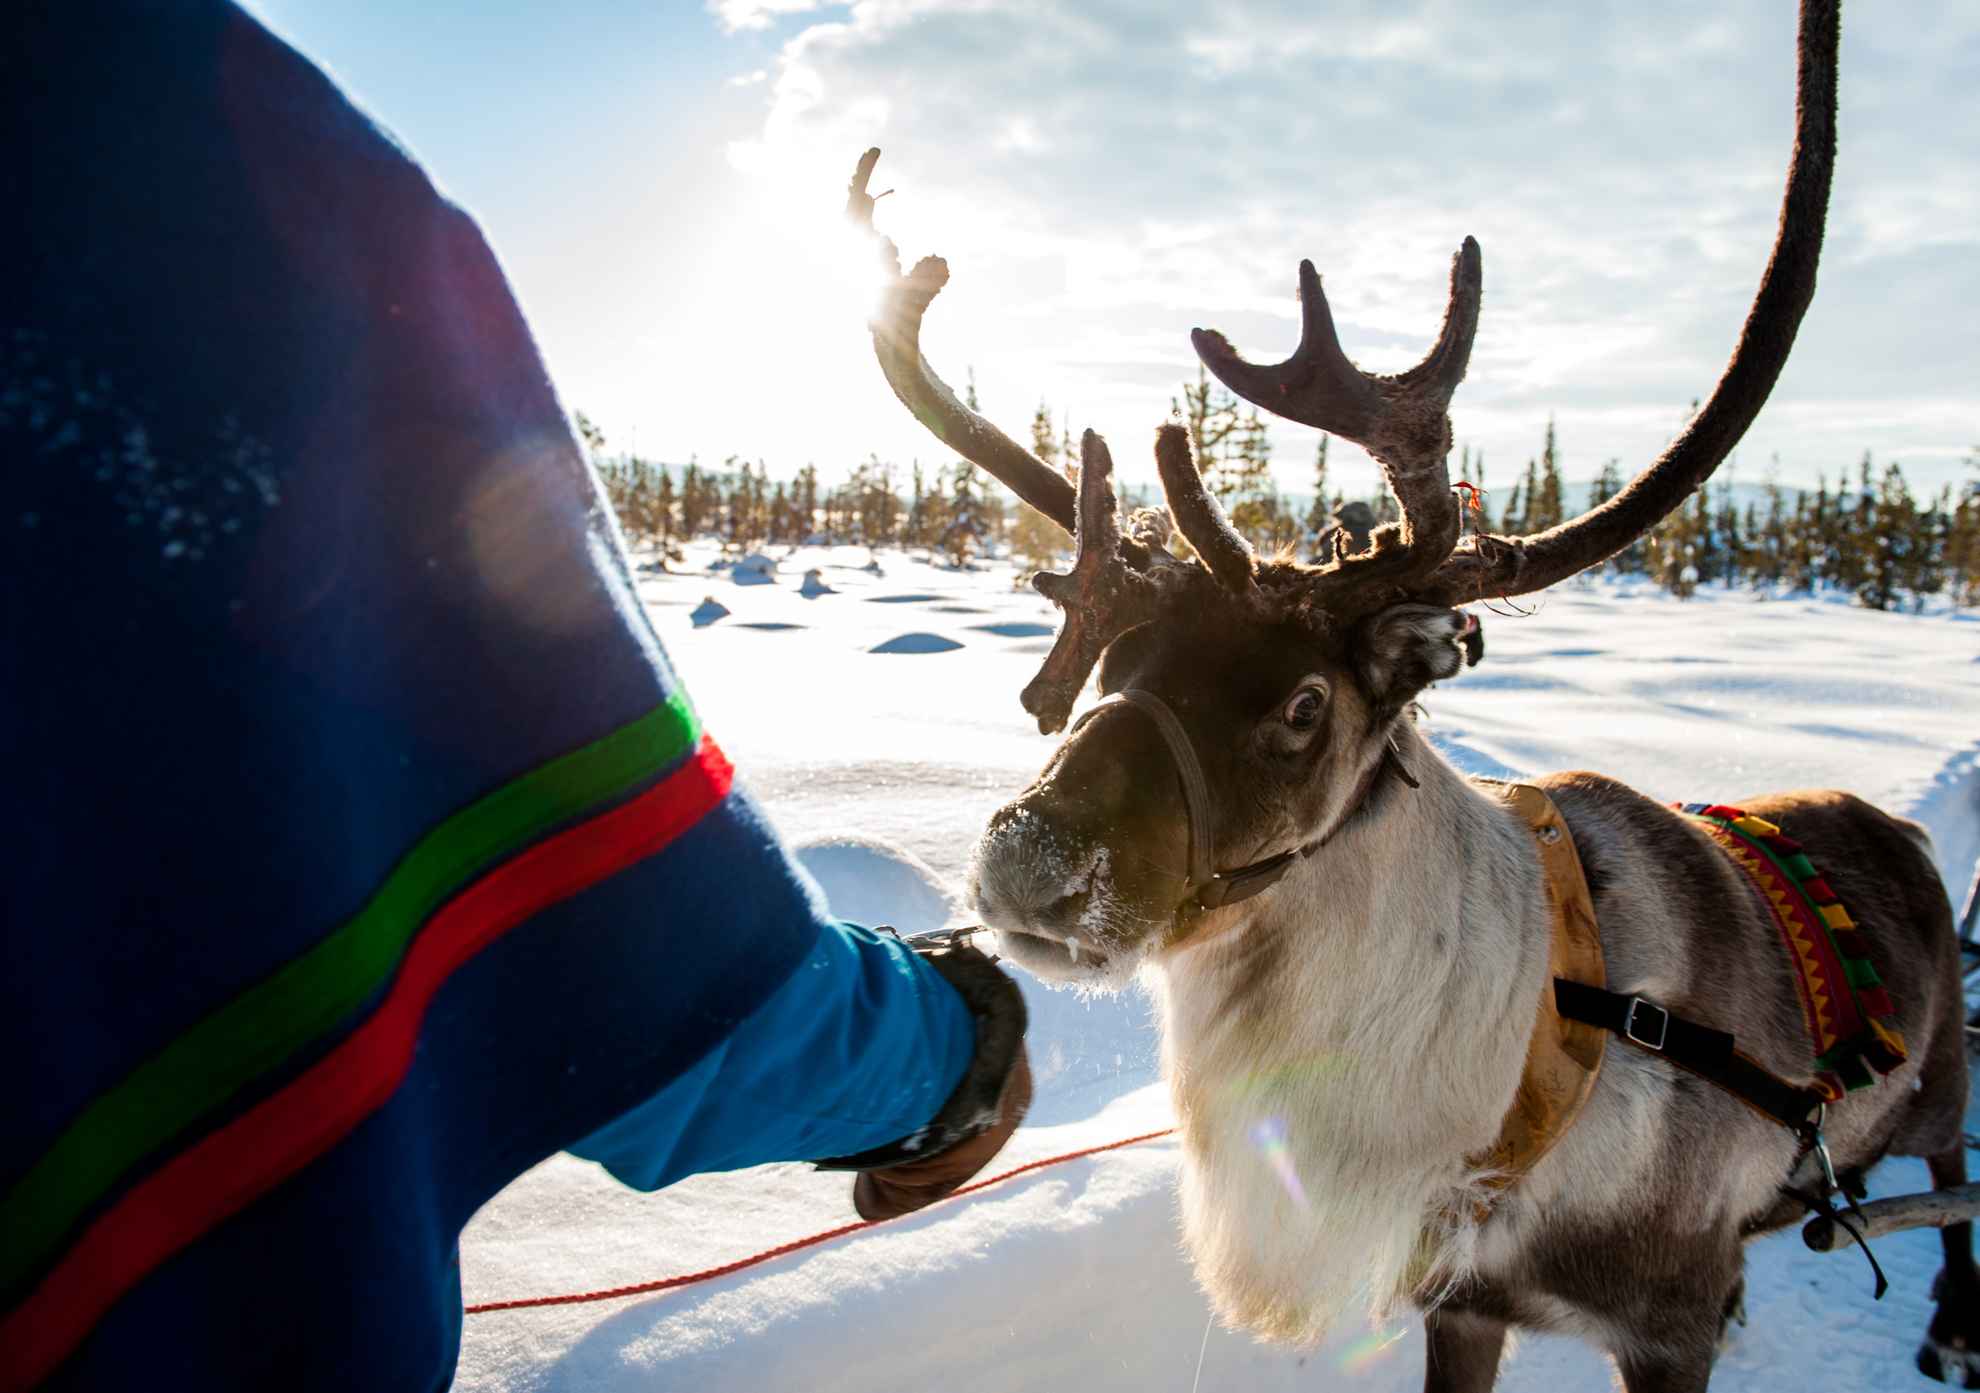 Sami with reindeer